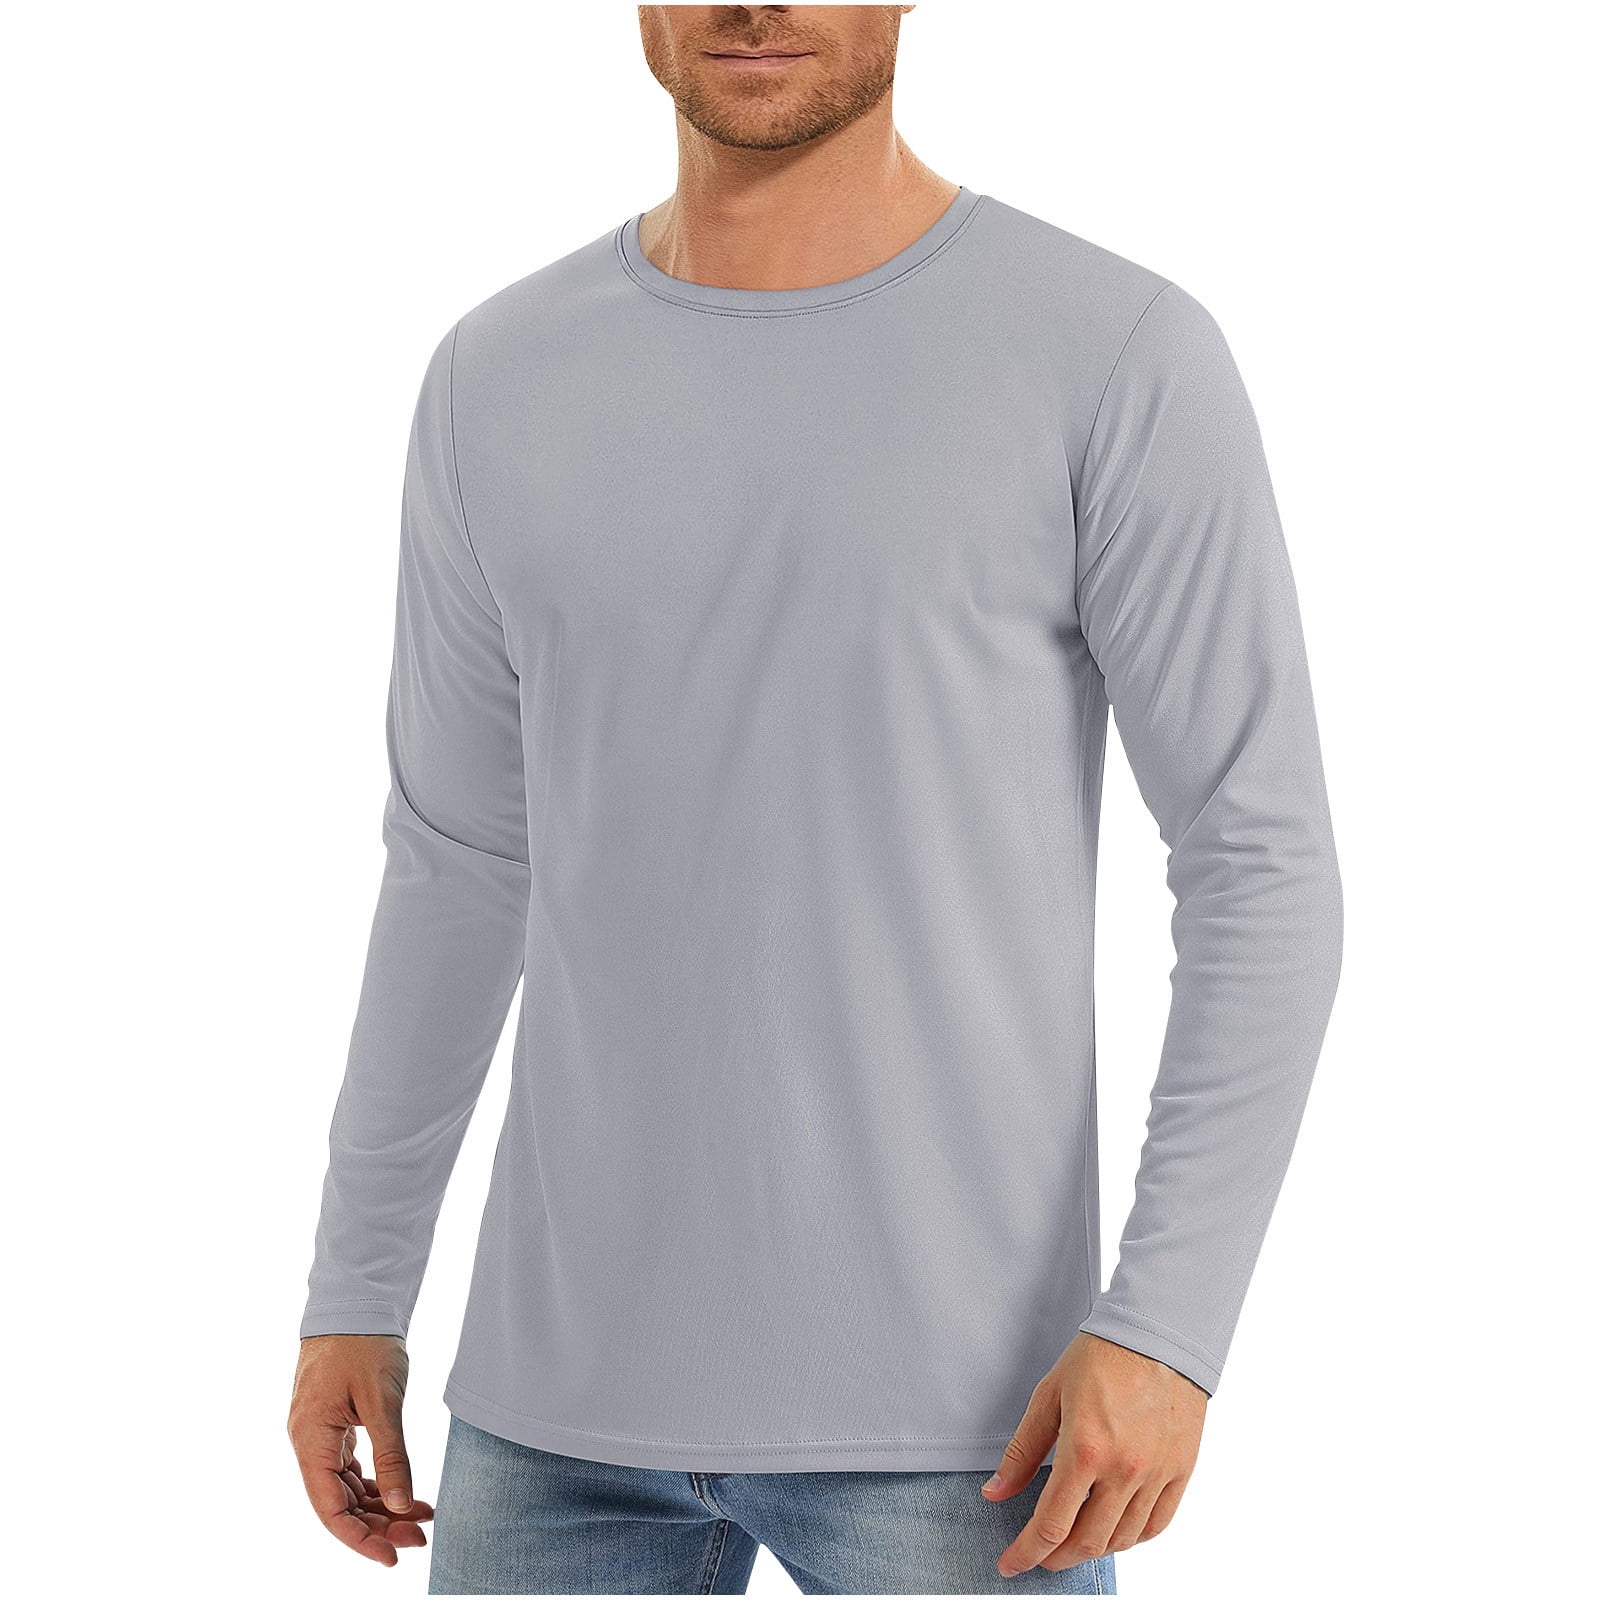 HBYJLZYG Men's UPF 50+ Sun Protection Shirts Outdoor UV Lightweight ...